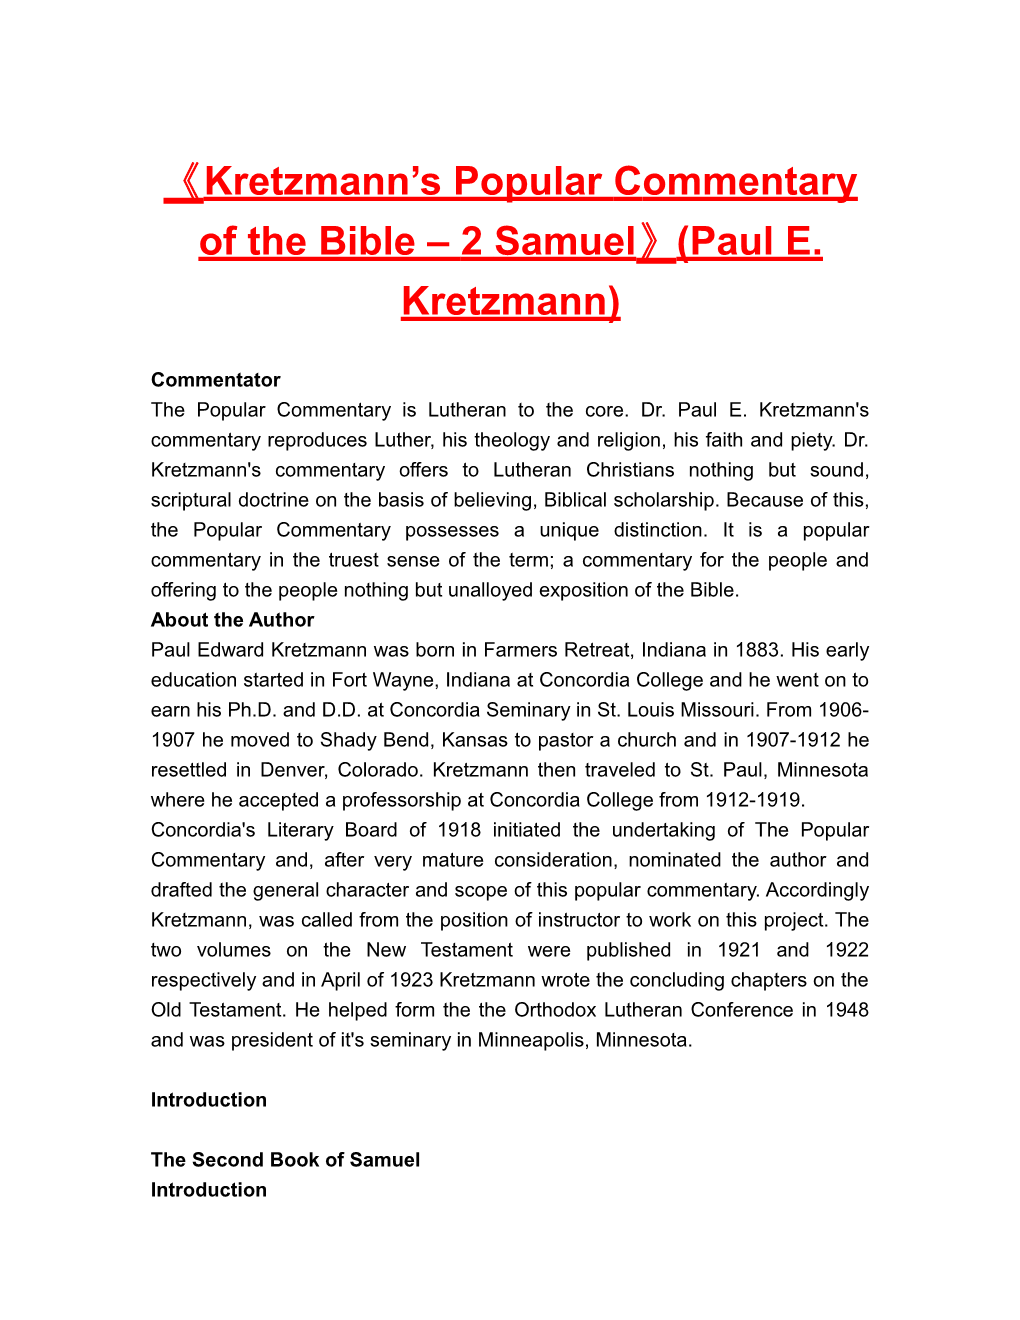 Kretzmann S Popularcommentary of the Bible 2 Samuel (Paul E. Kretzmann)